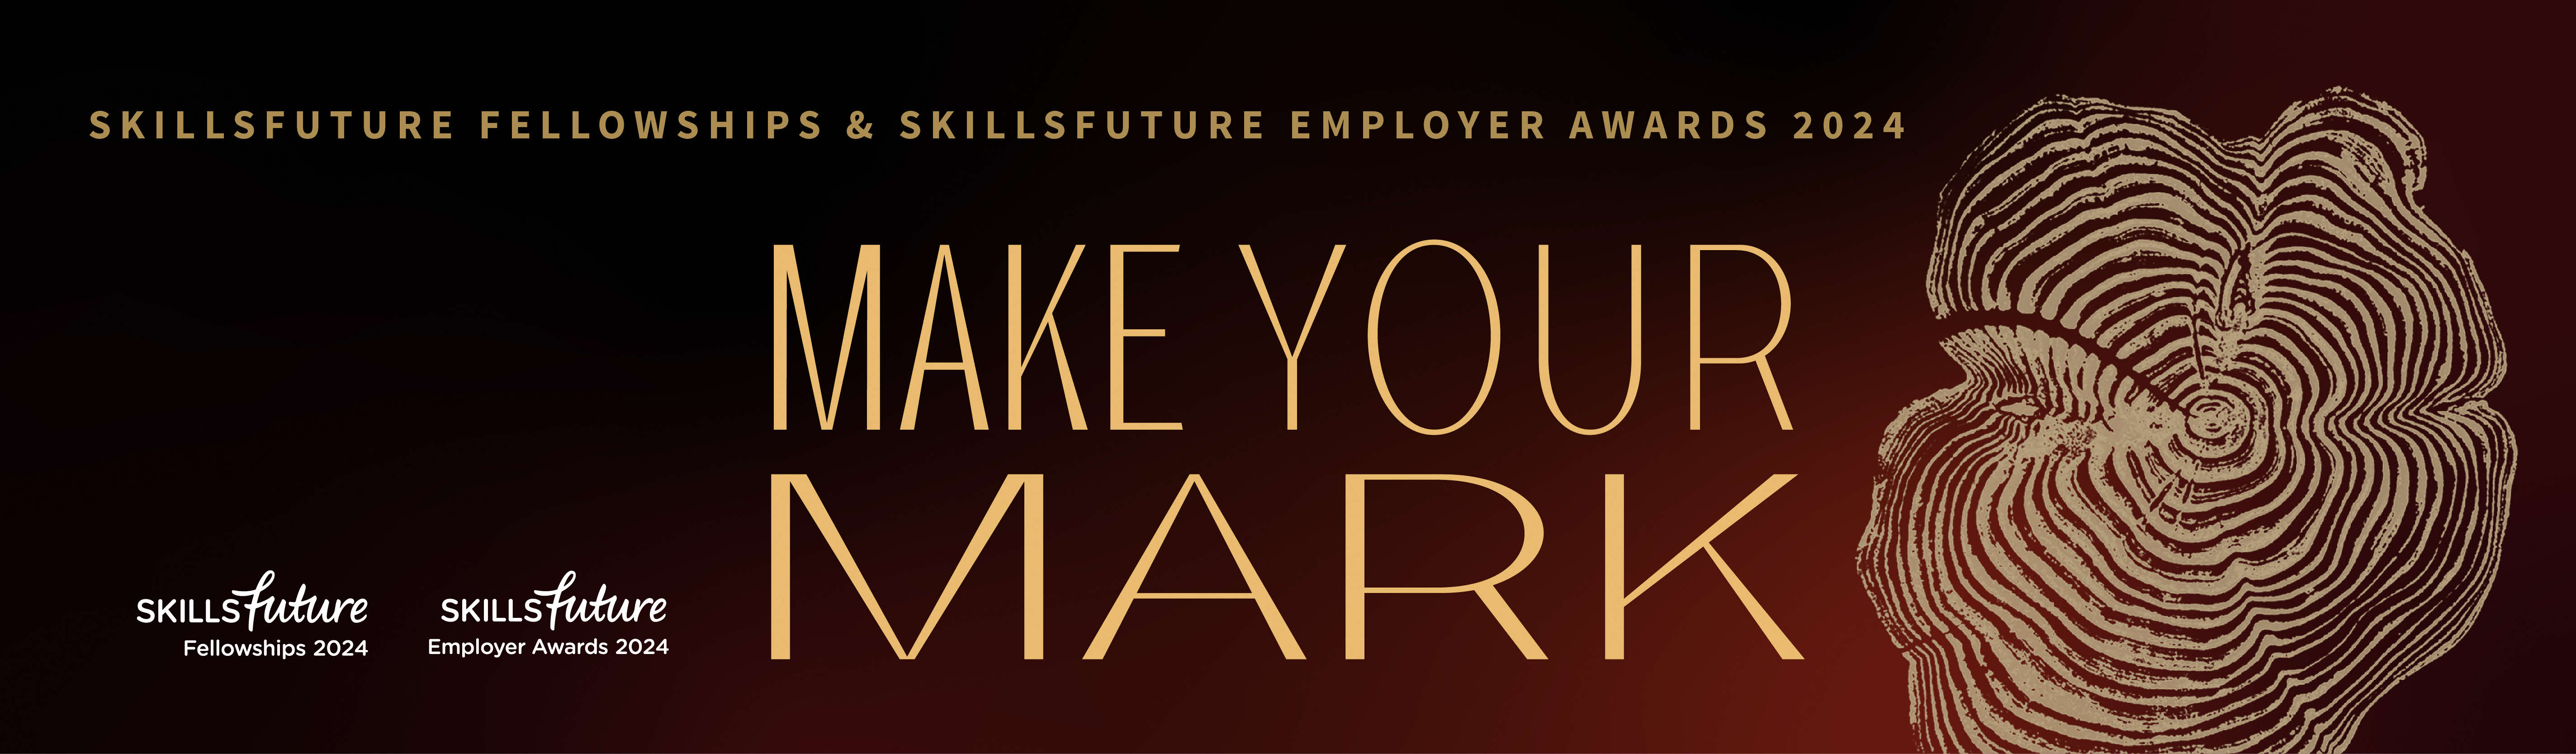 SkillsFuture Fellowships & SkillsFuture Employer Awards 2024 banner